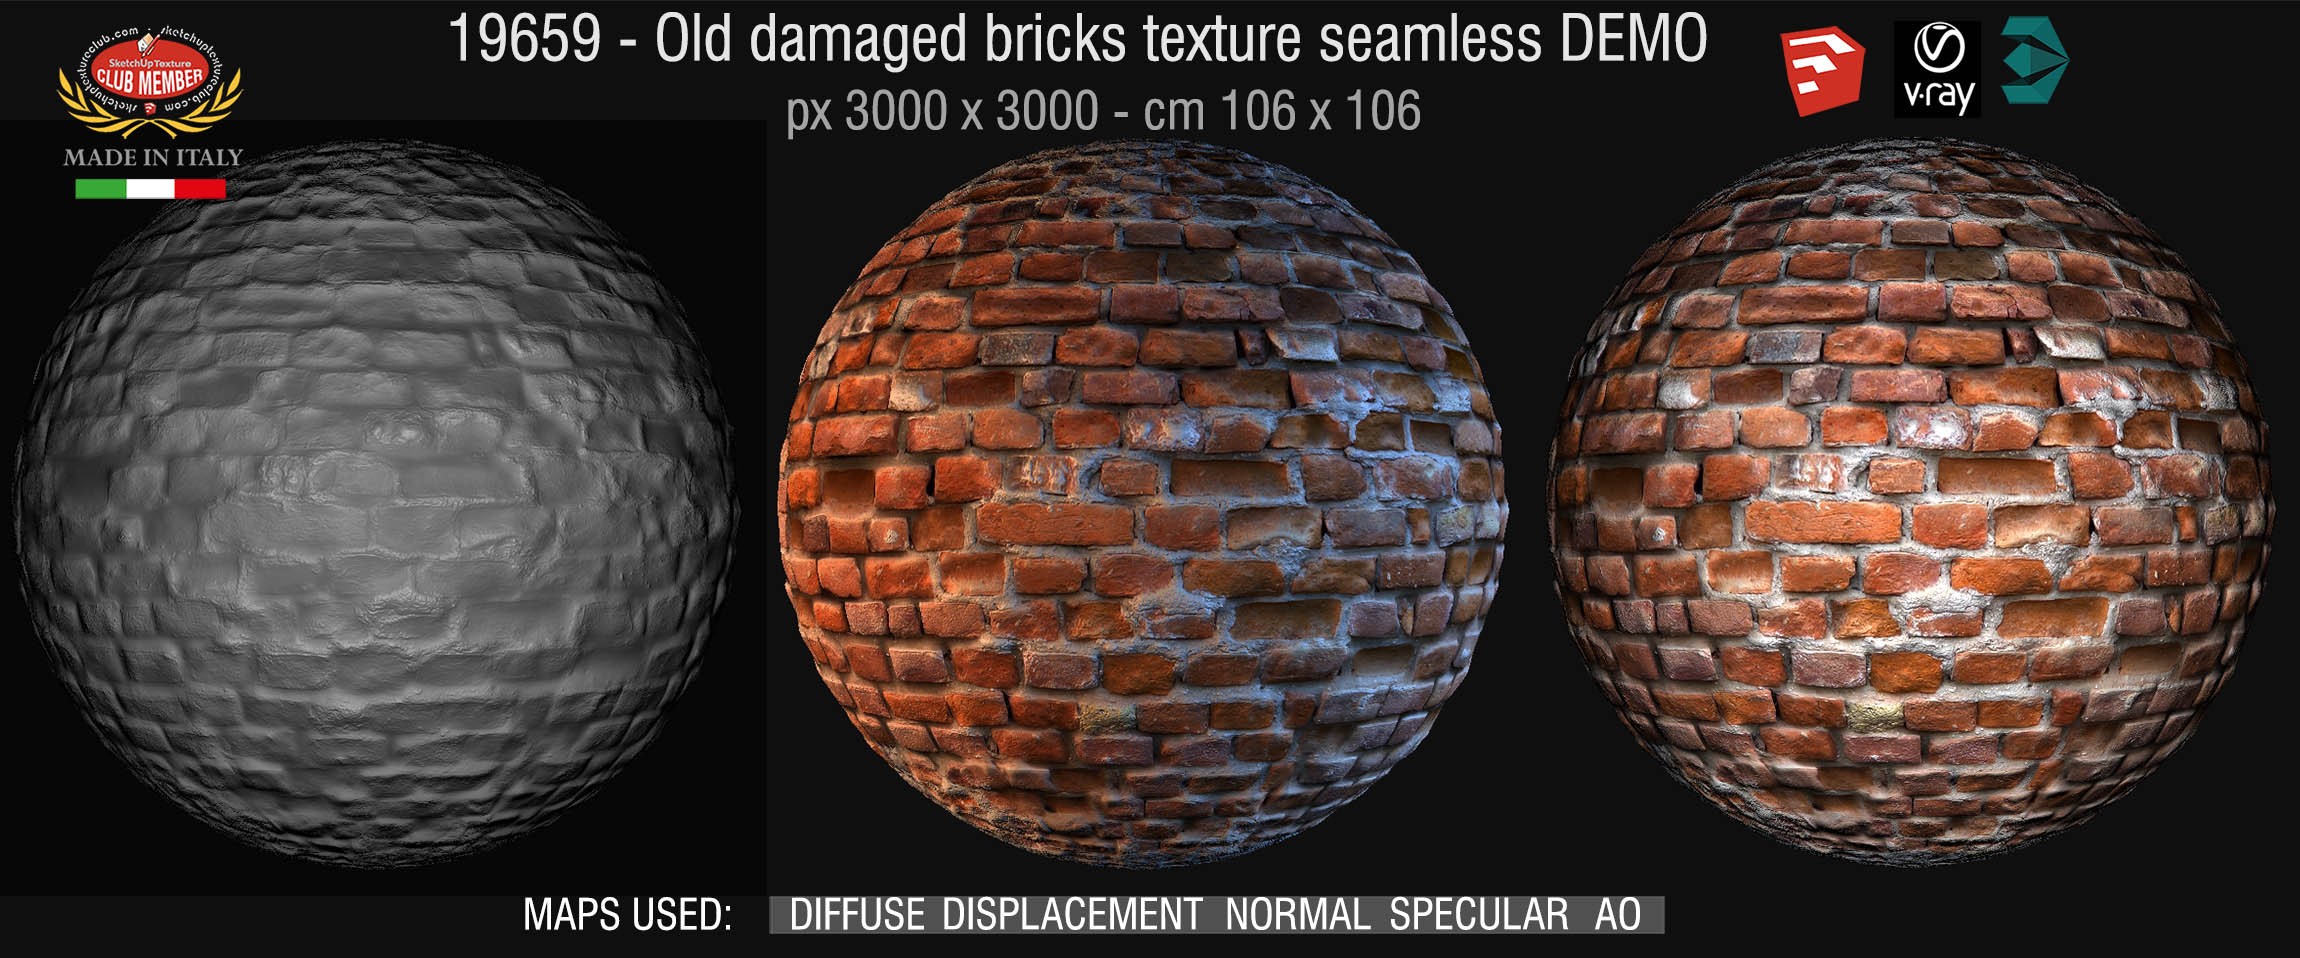 19659 HR Damaged bricks texture seamless + maps DEMO